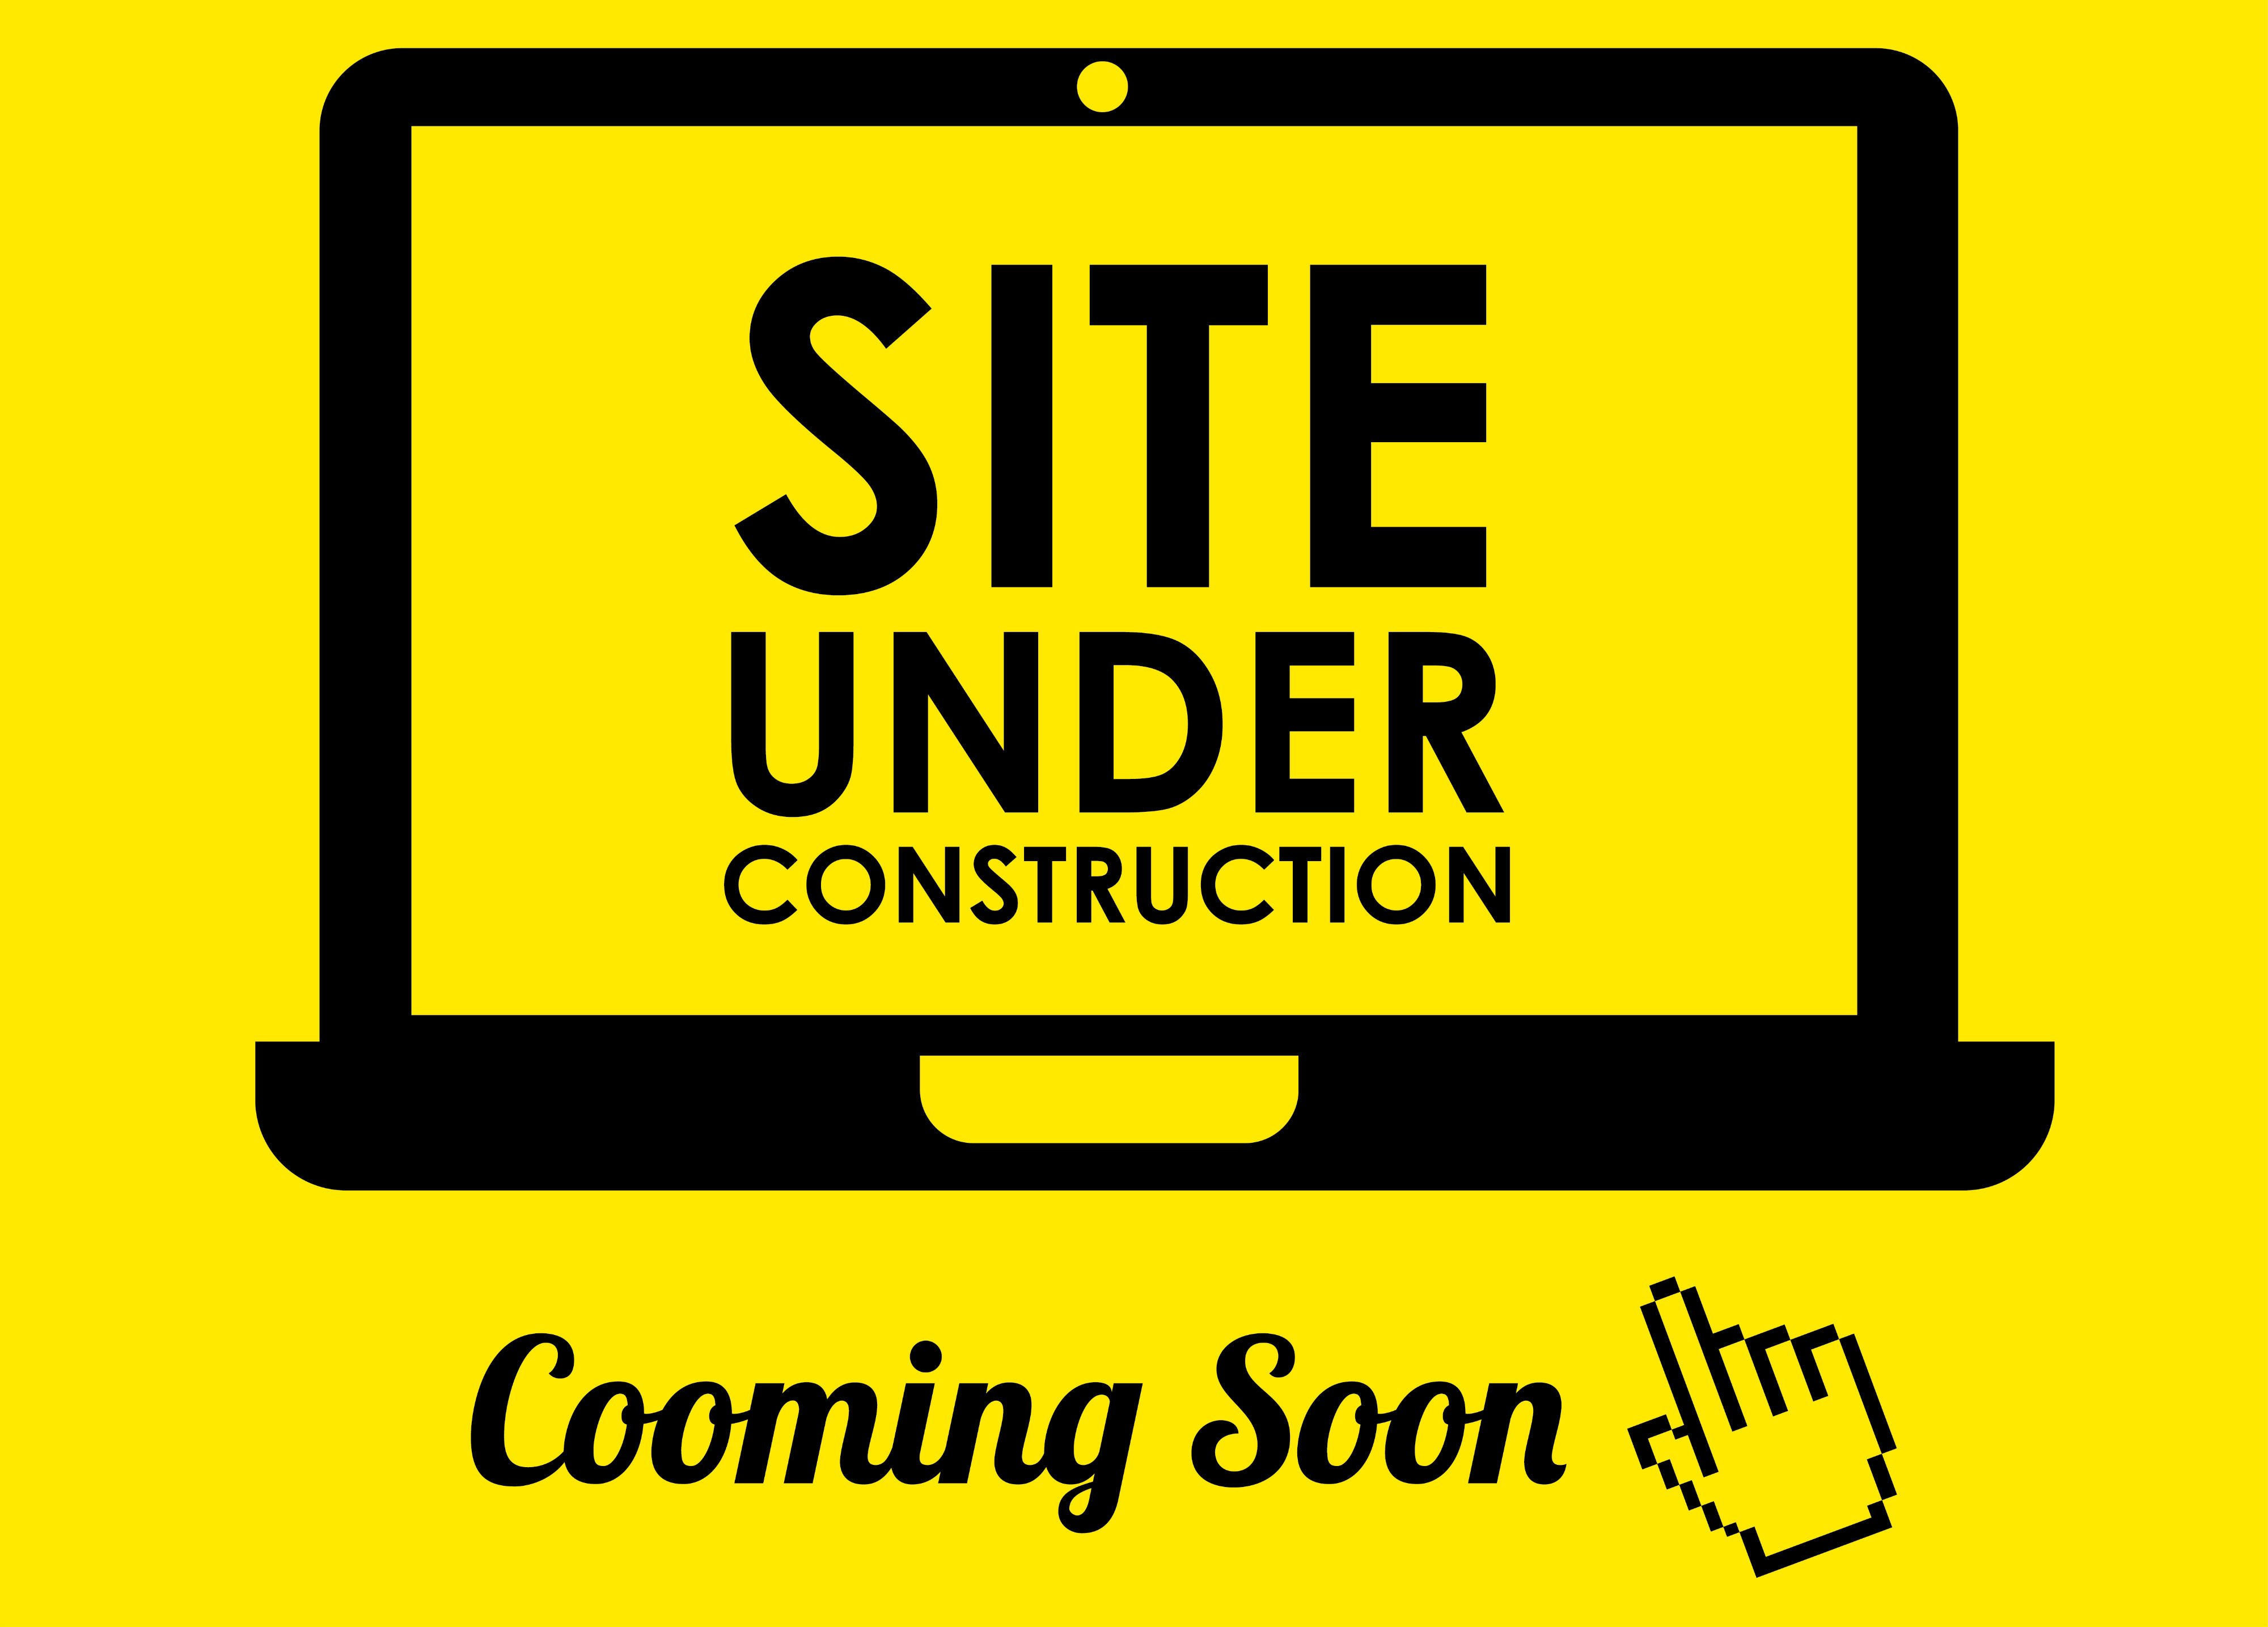 Website Under Construction Wallpapers